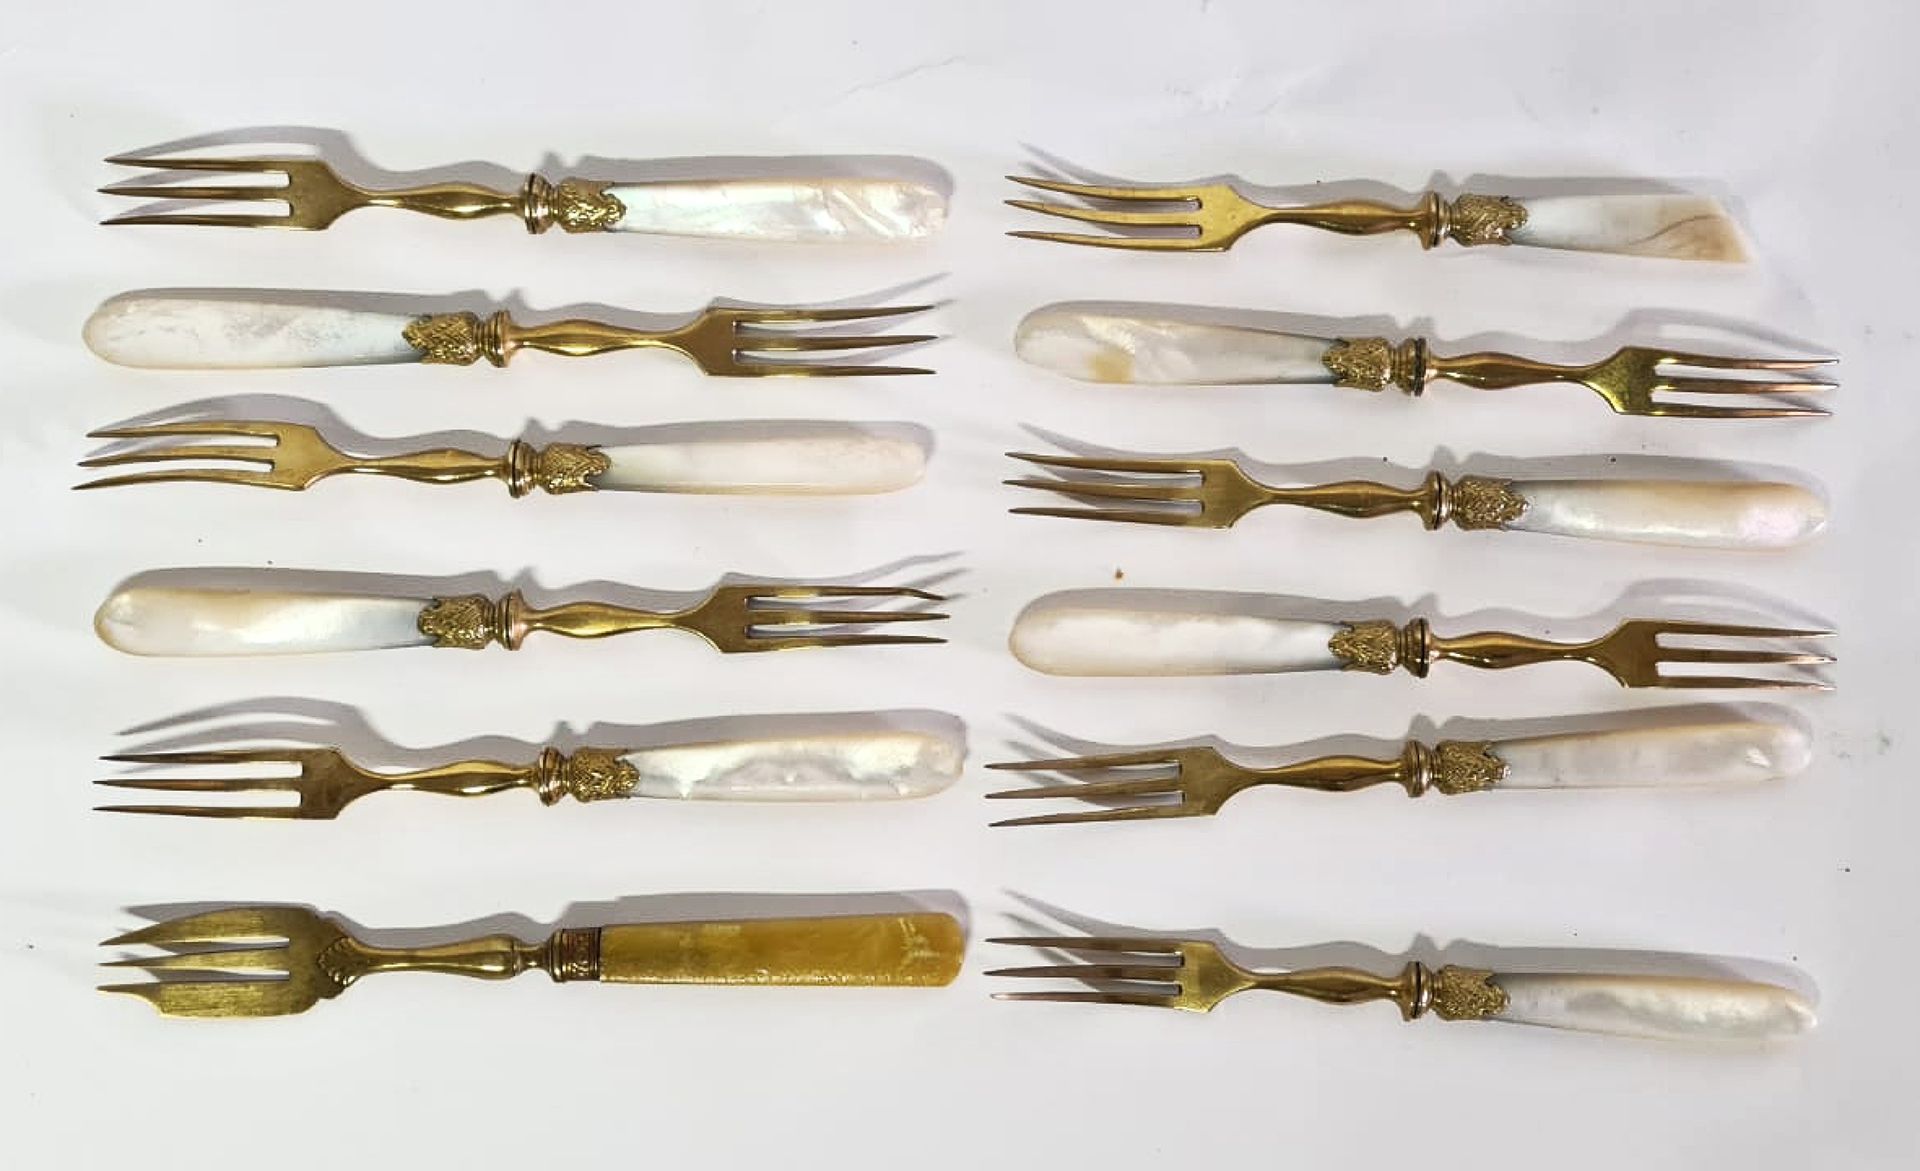 Null 鎏金金属和珍珠母手柄的水果服务套装，包括:

11个叉子

12把刀

(对珍珠母的意外)

一把镀金金属和树脂手柄的蛋糕叉子